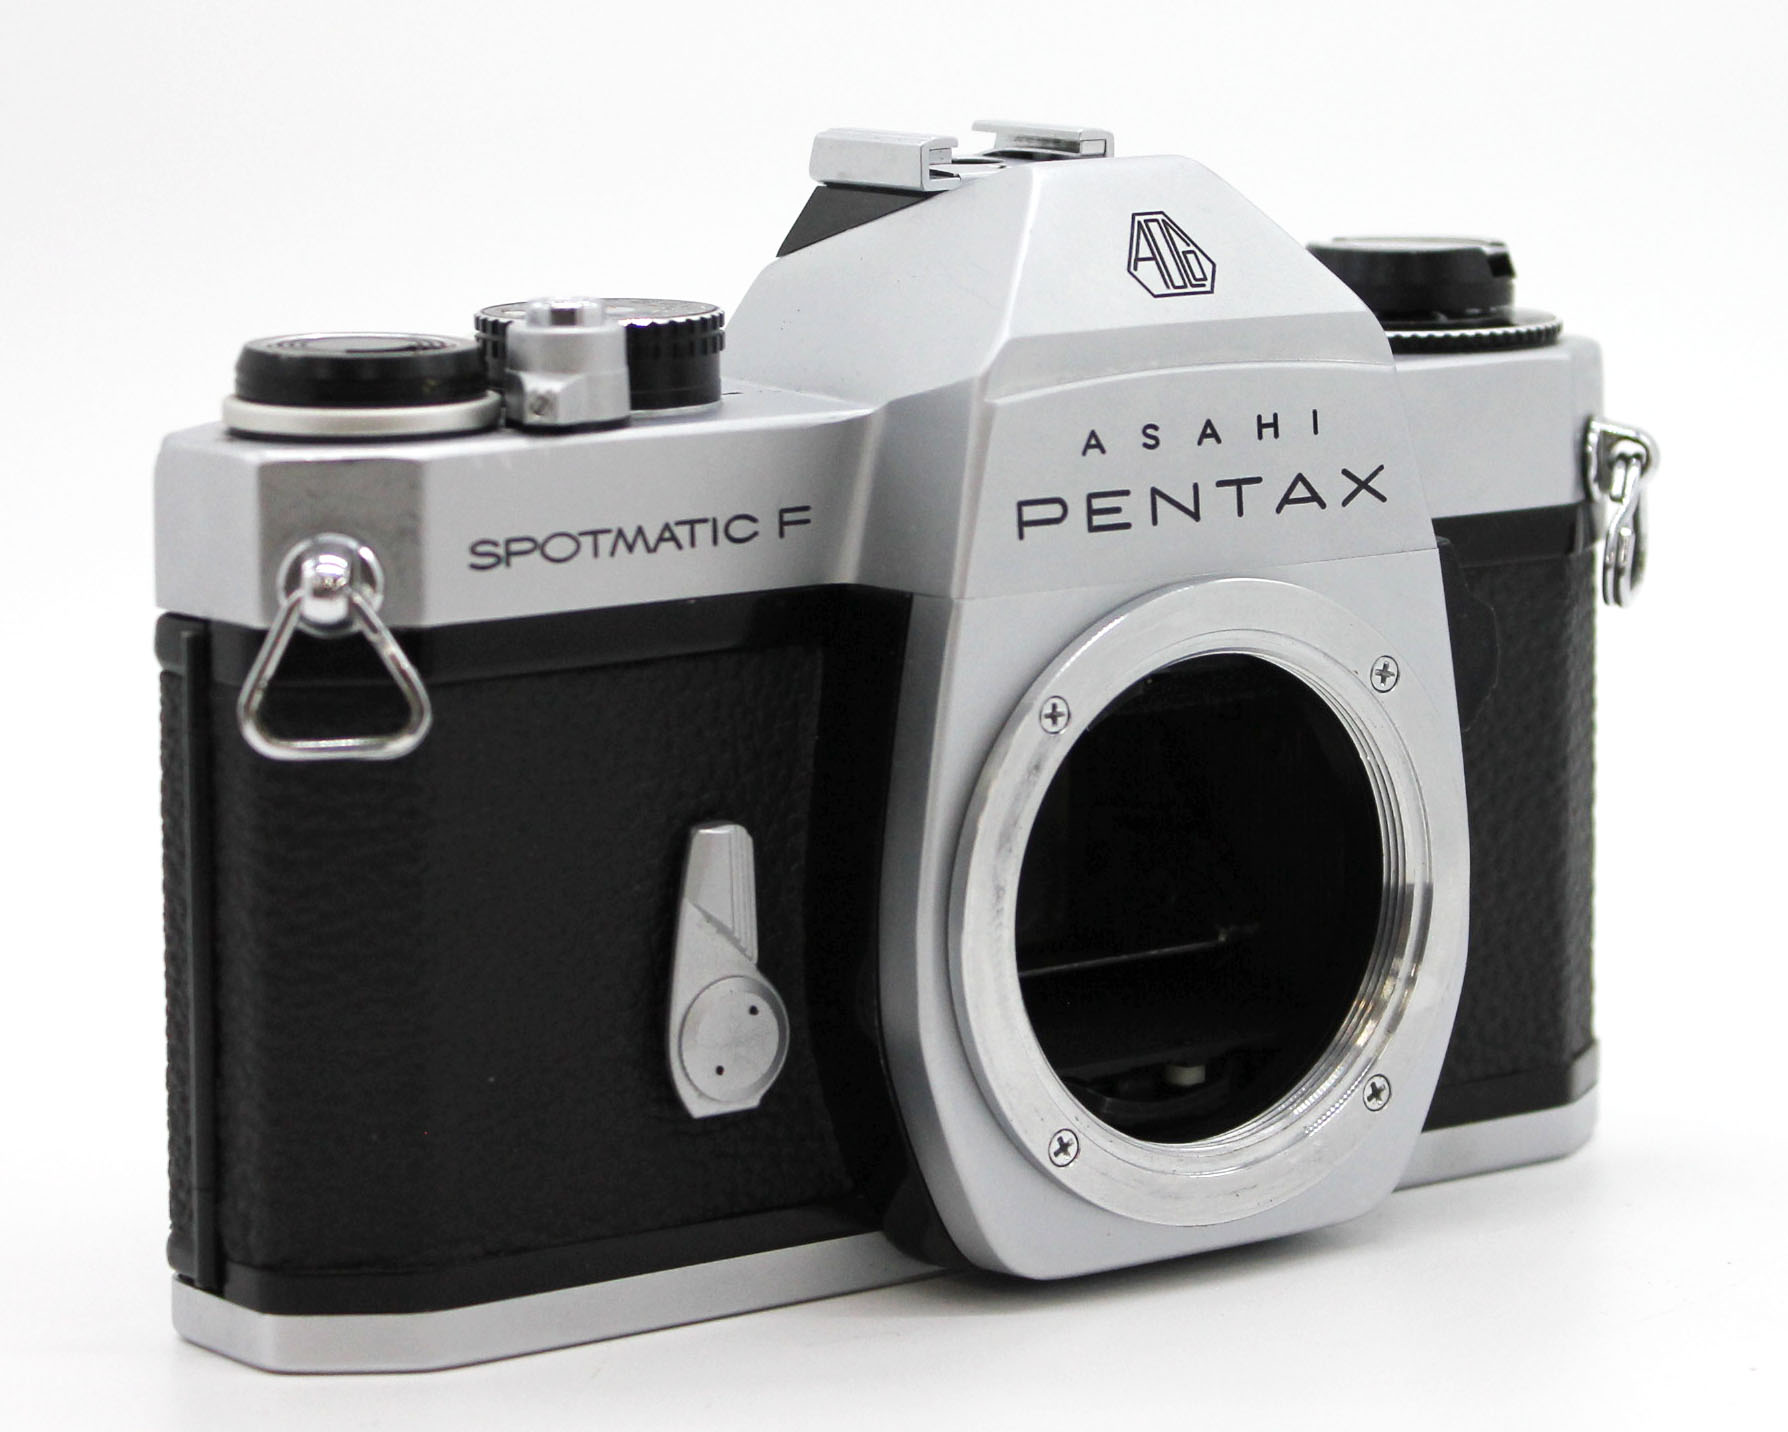 Asahi Pentax Spotmatic F SPF 35mm SLR Camera w/ SMC Takumar 55mm F/1.8 Lens from Japan Photo 2